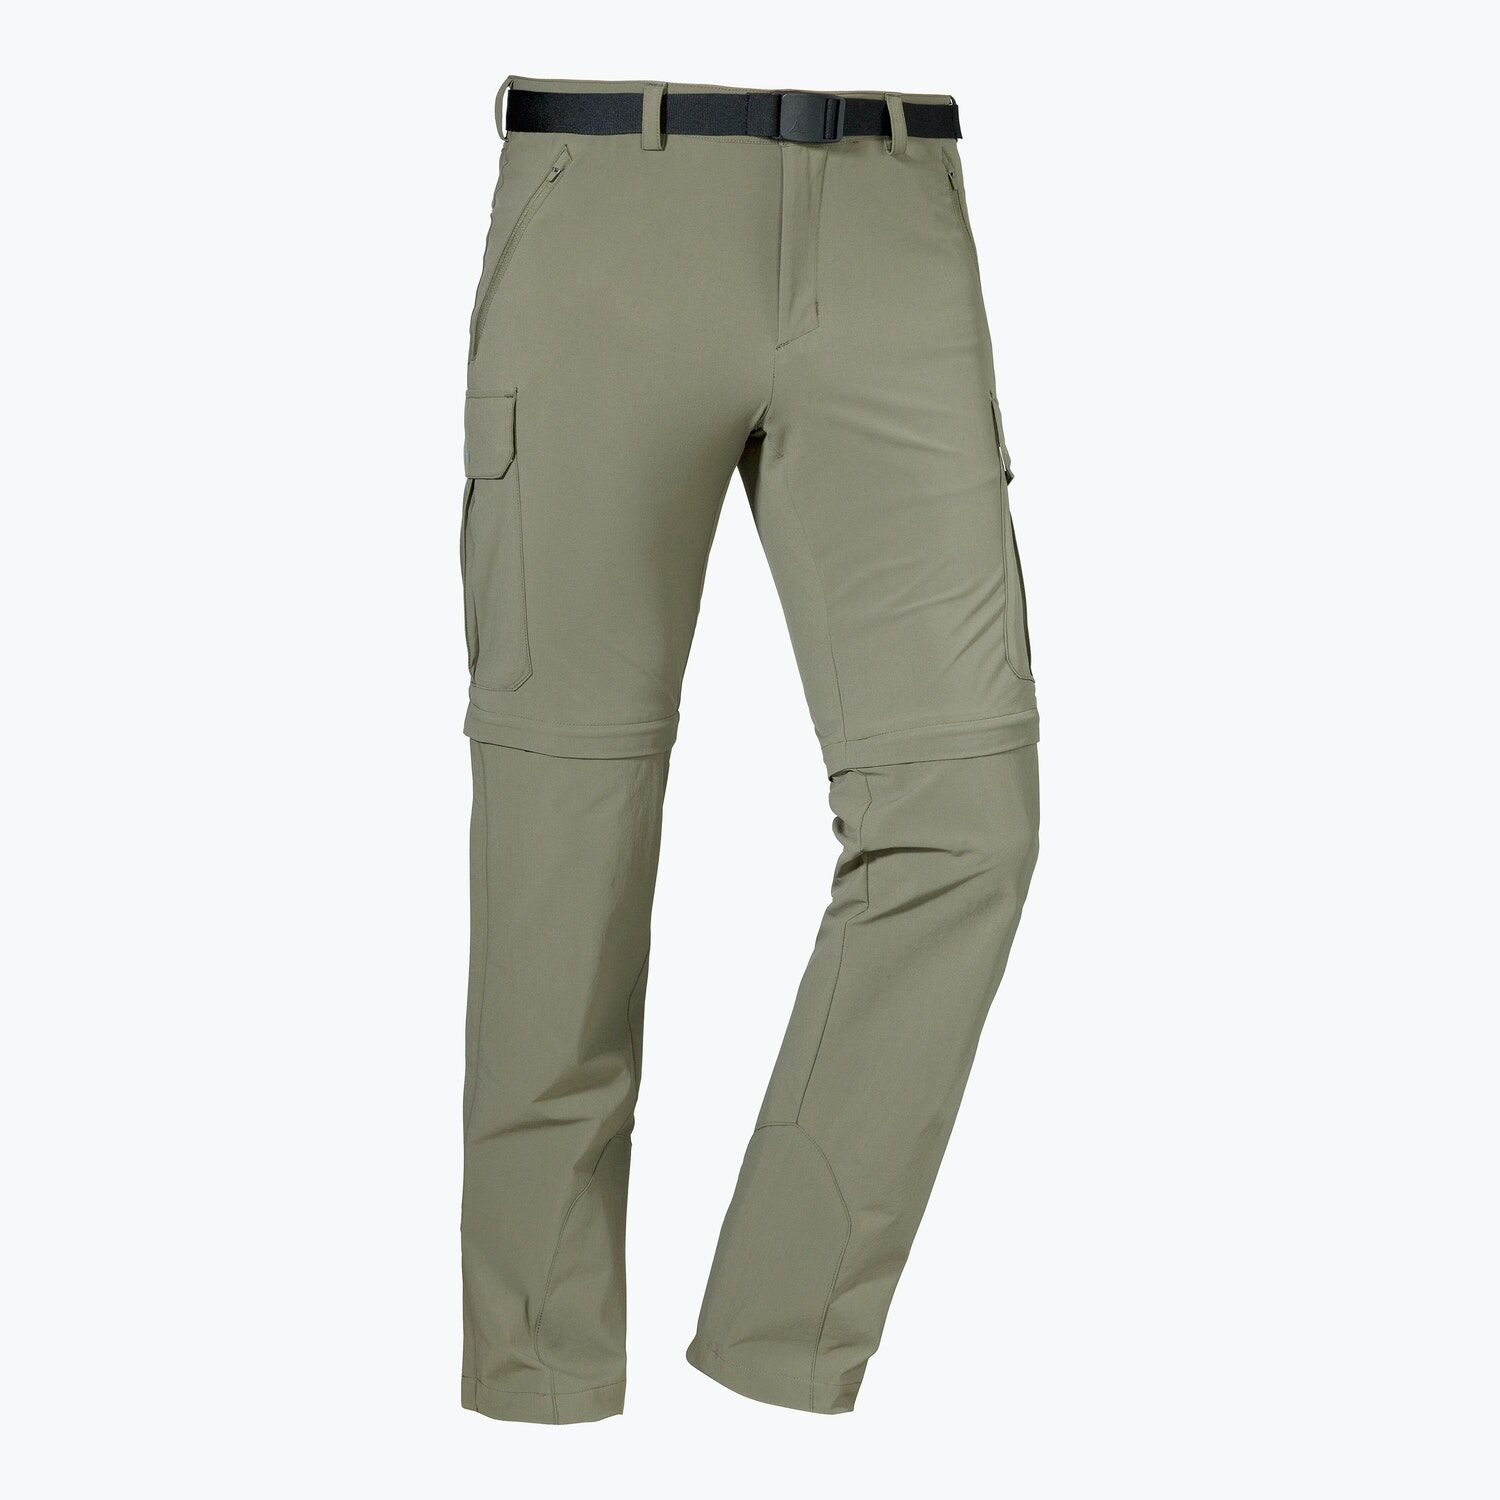 Schöffel Pants Kyoto3 - Walking trousers - Men's